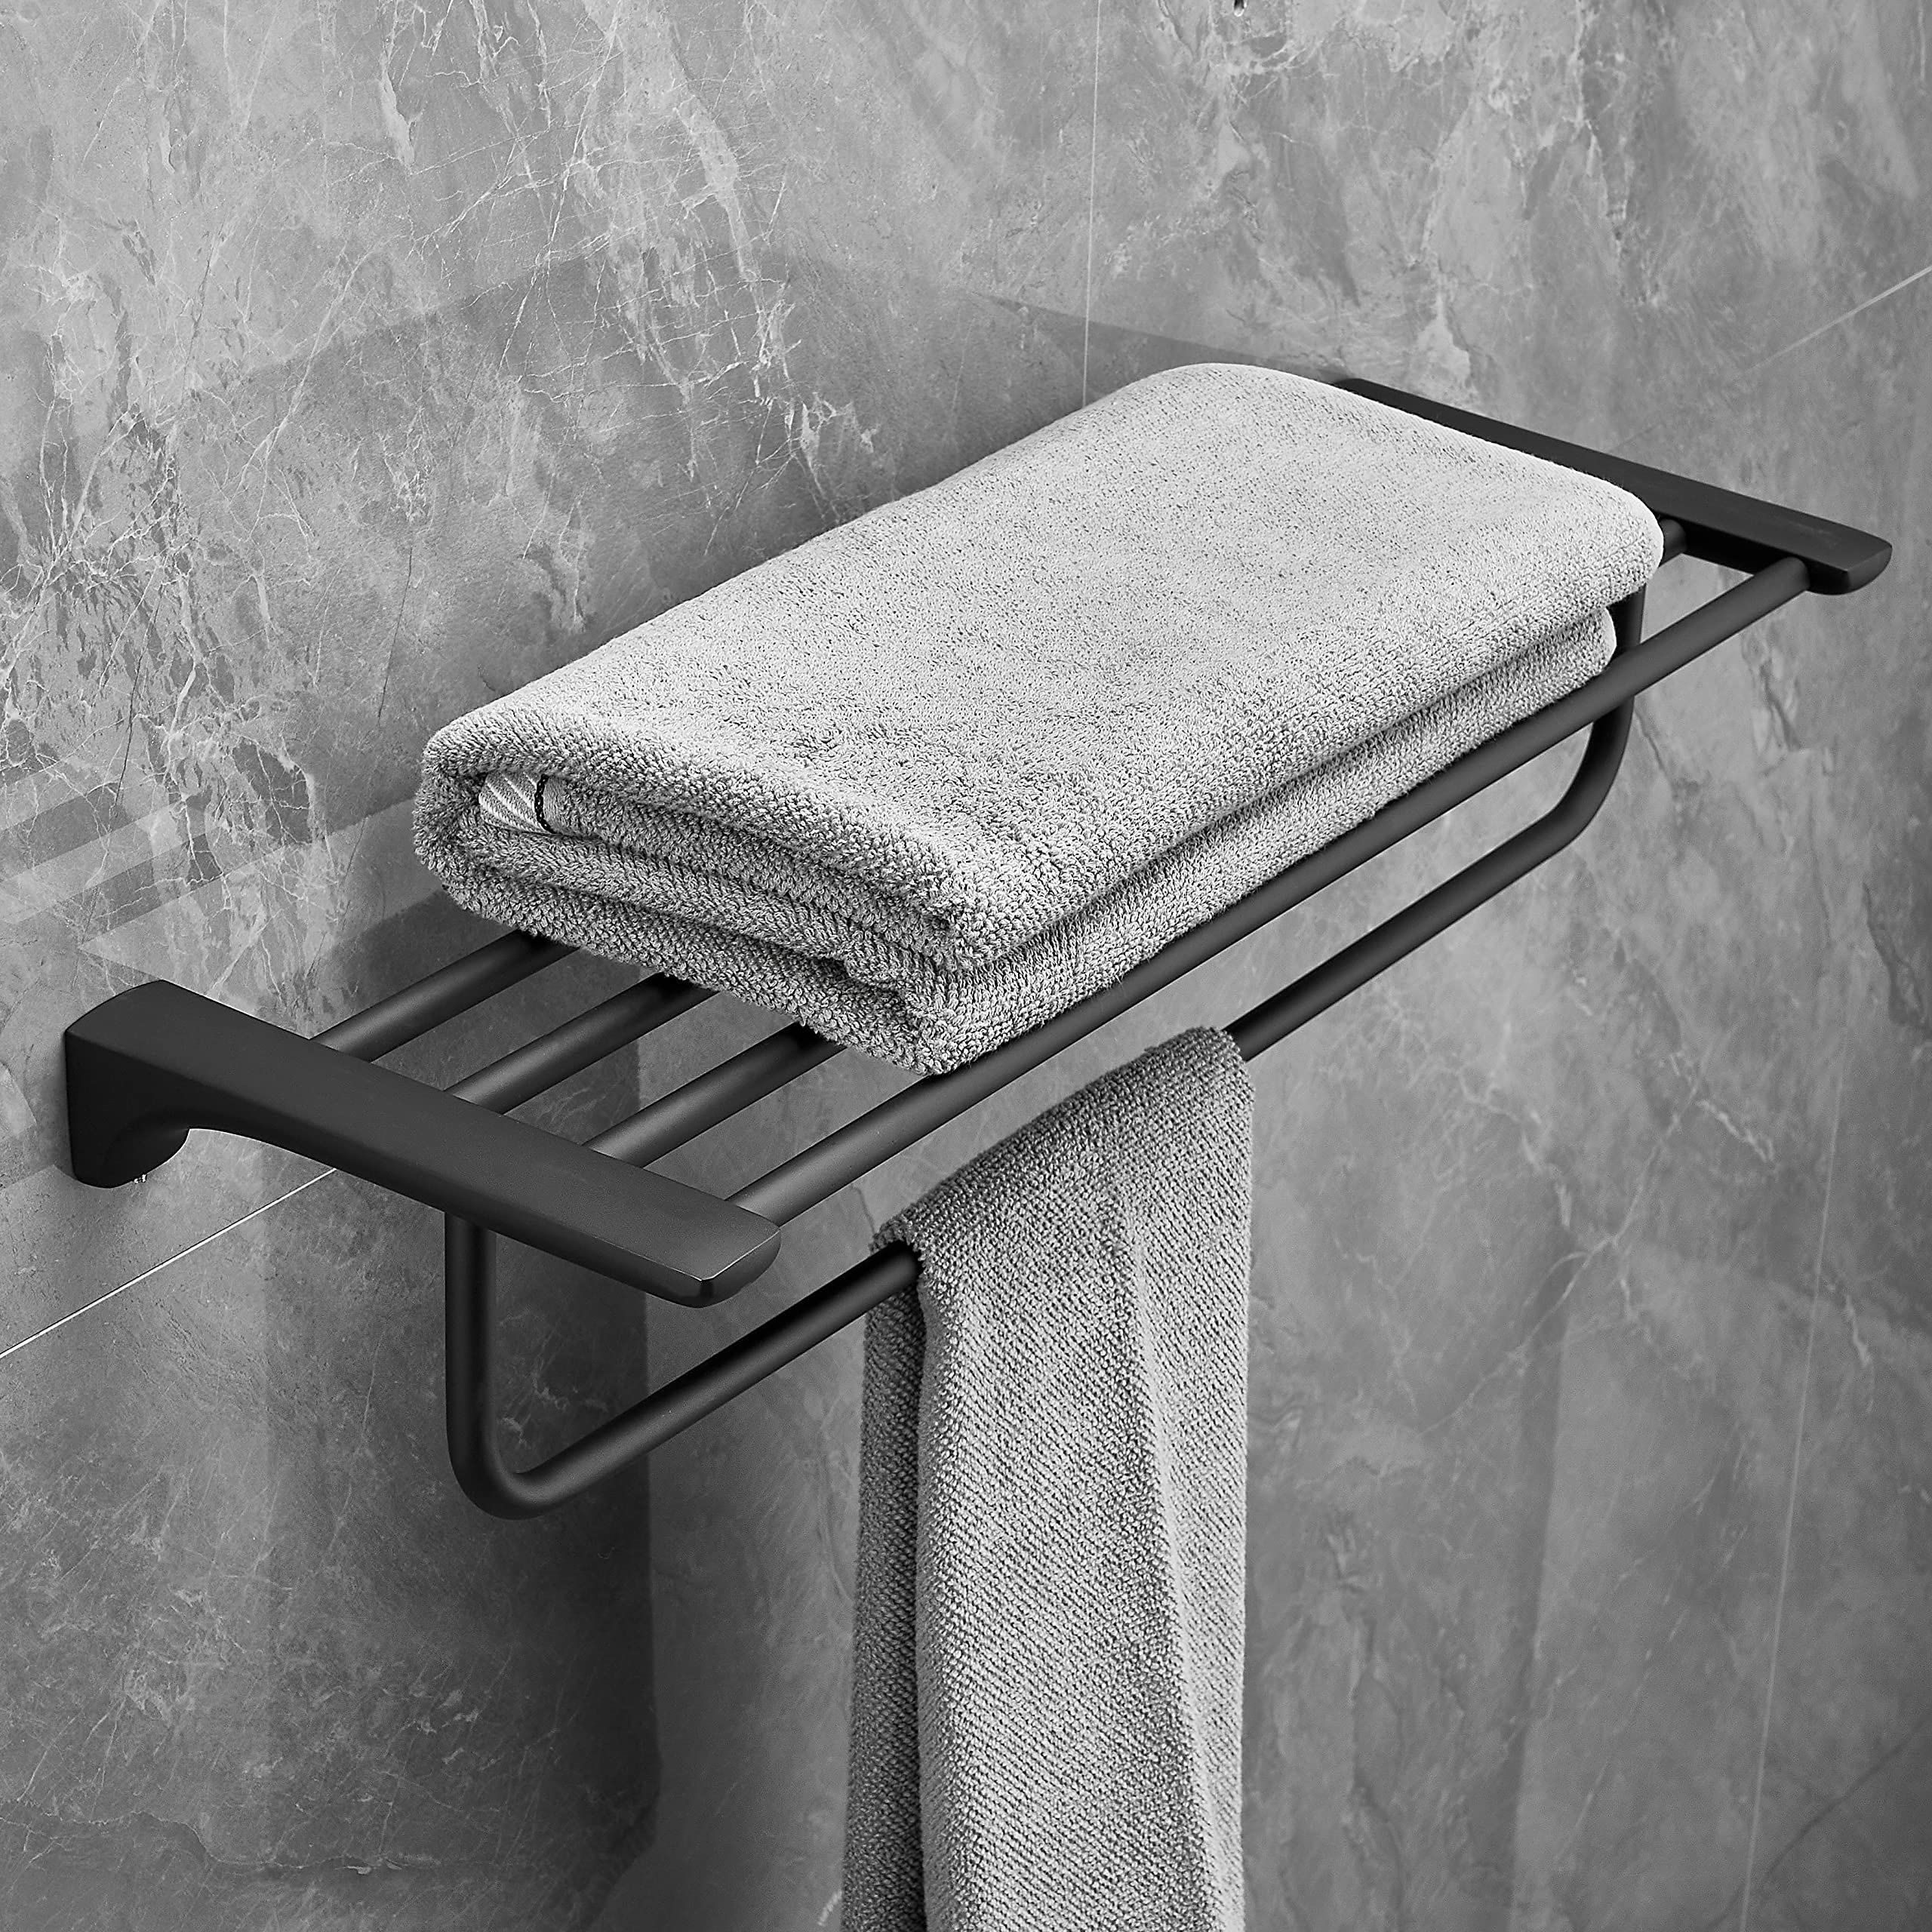 Plantex Space Aluminium Towel Rack with Fix Towel Rod/Towel Bar/Towel Hanger for Bathroom/Loundry Room/Kitchen/Bathroom Accessories (970, Black)